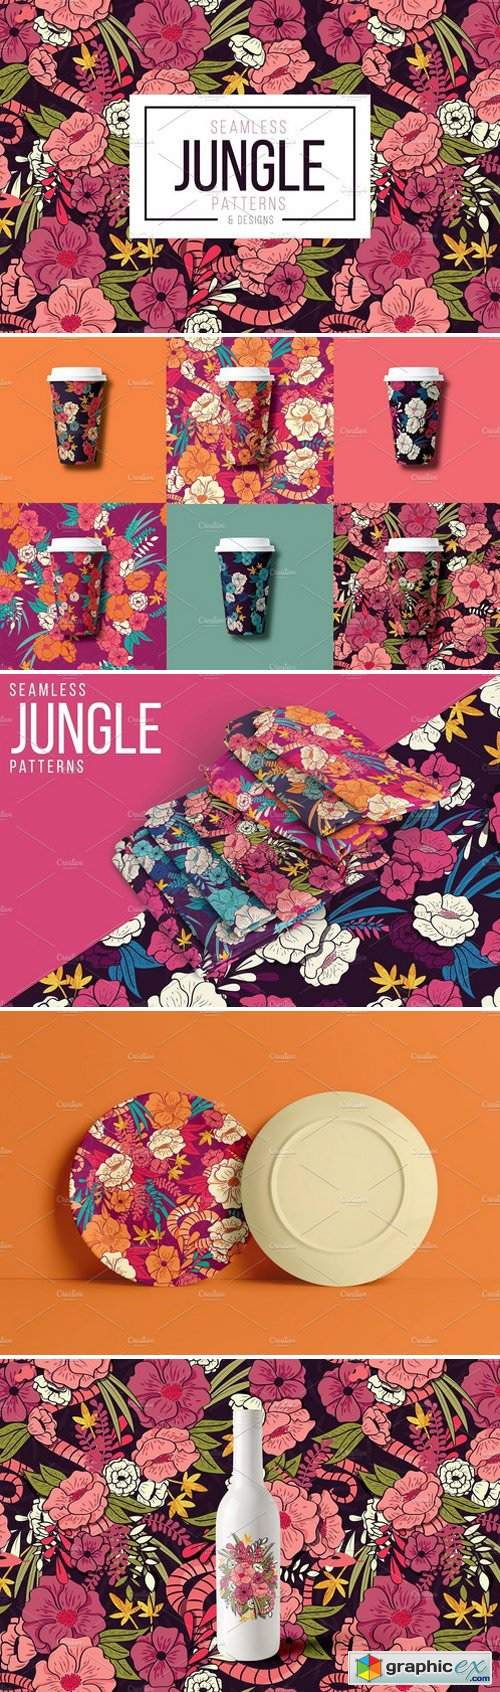 Jungle Floral Patterns & Designs